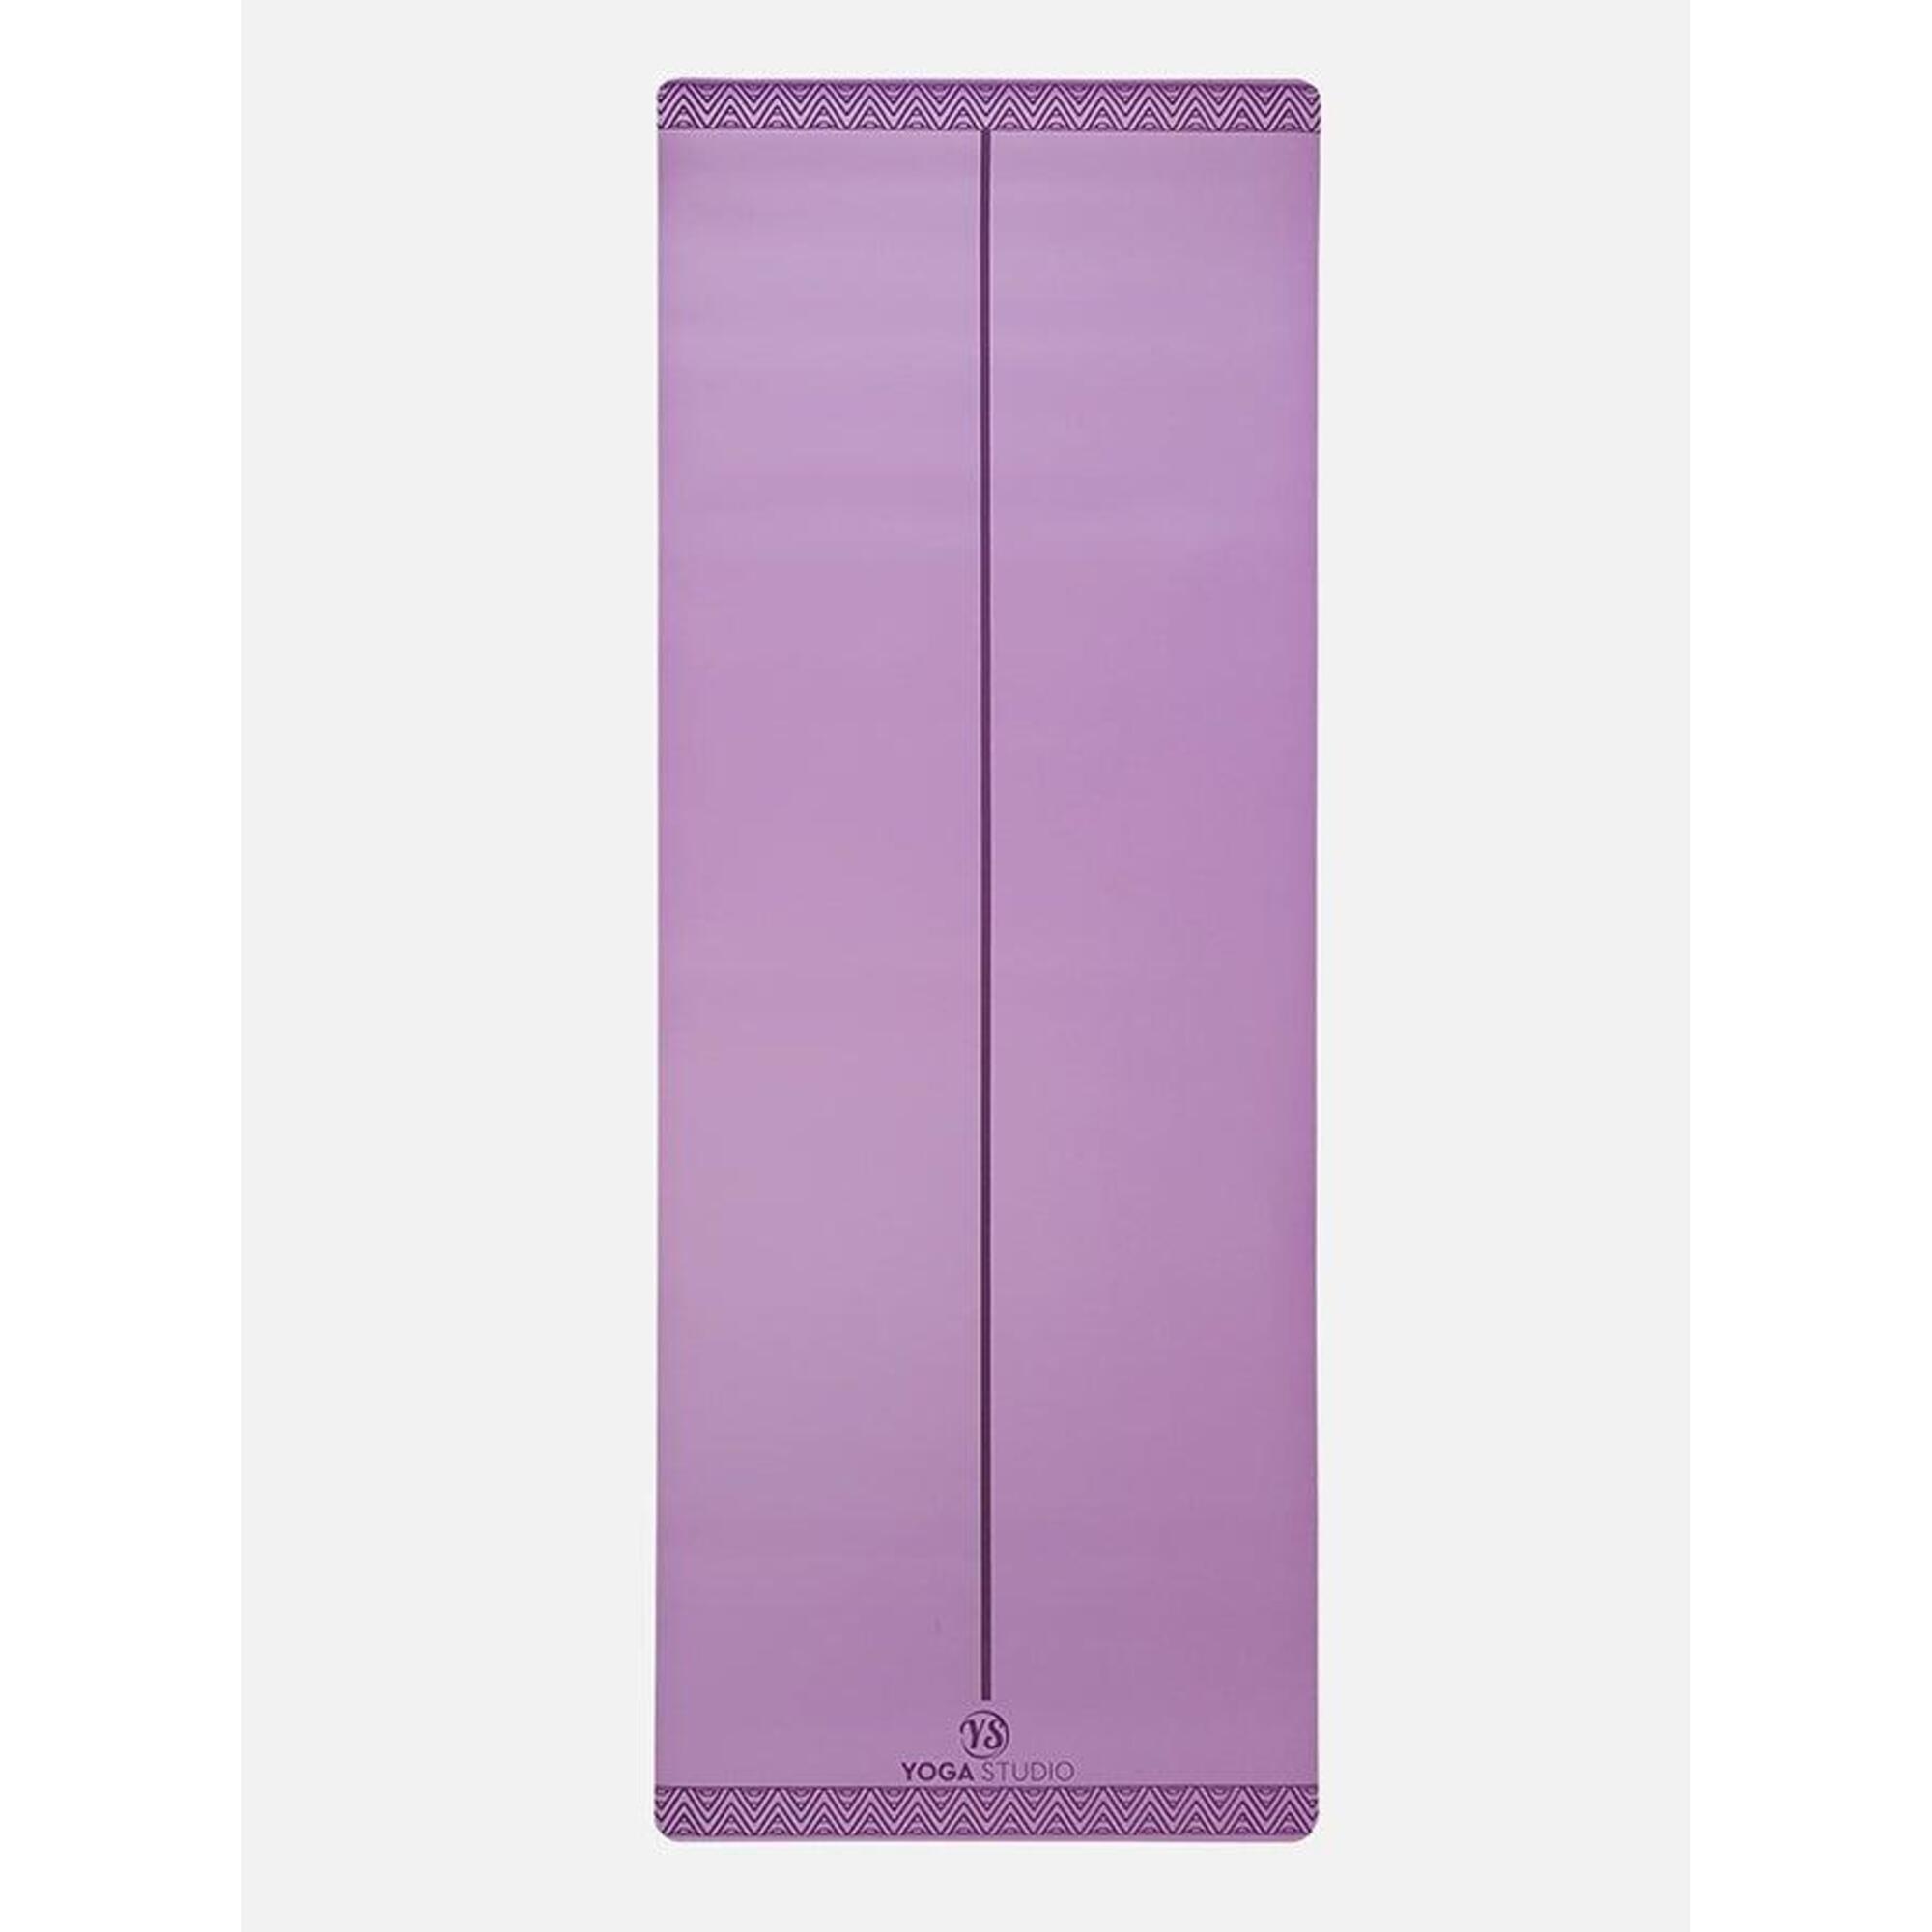 Yoga Studio The Grip Alignment Mat (4mm) - Purple 1/4